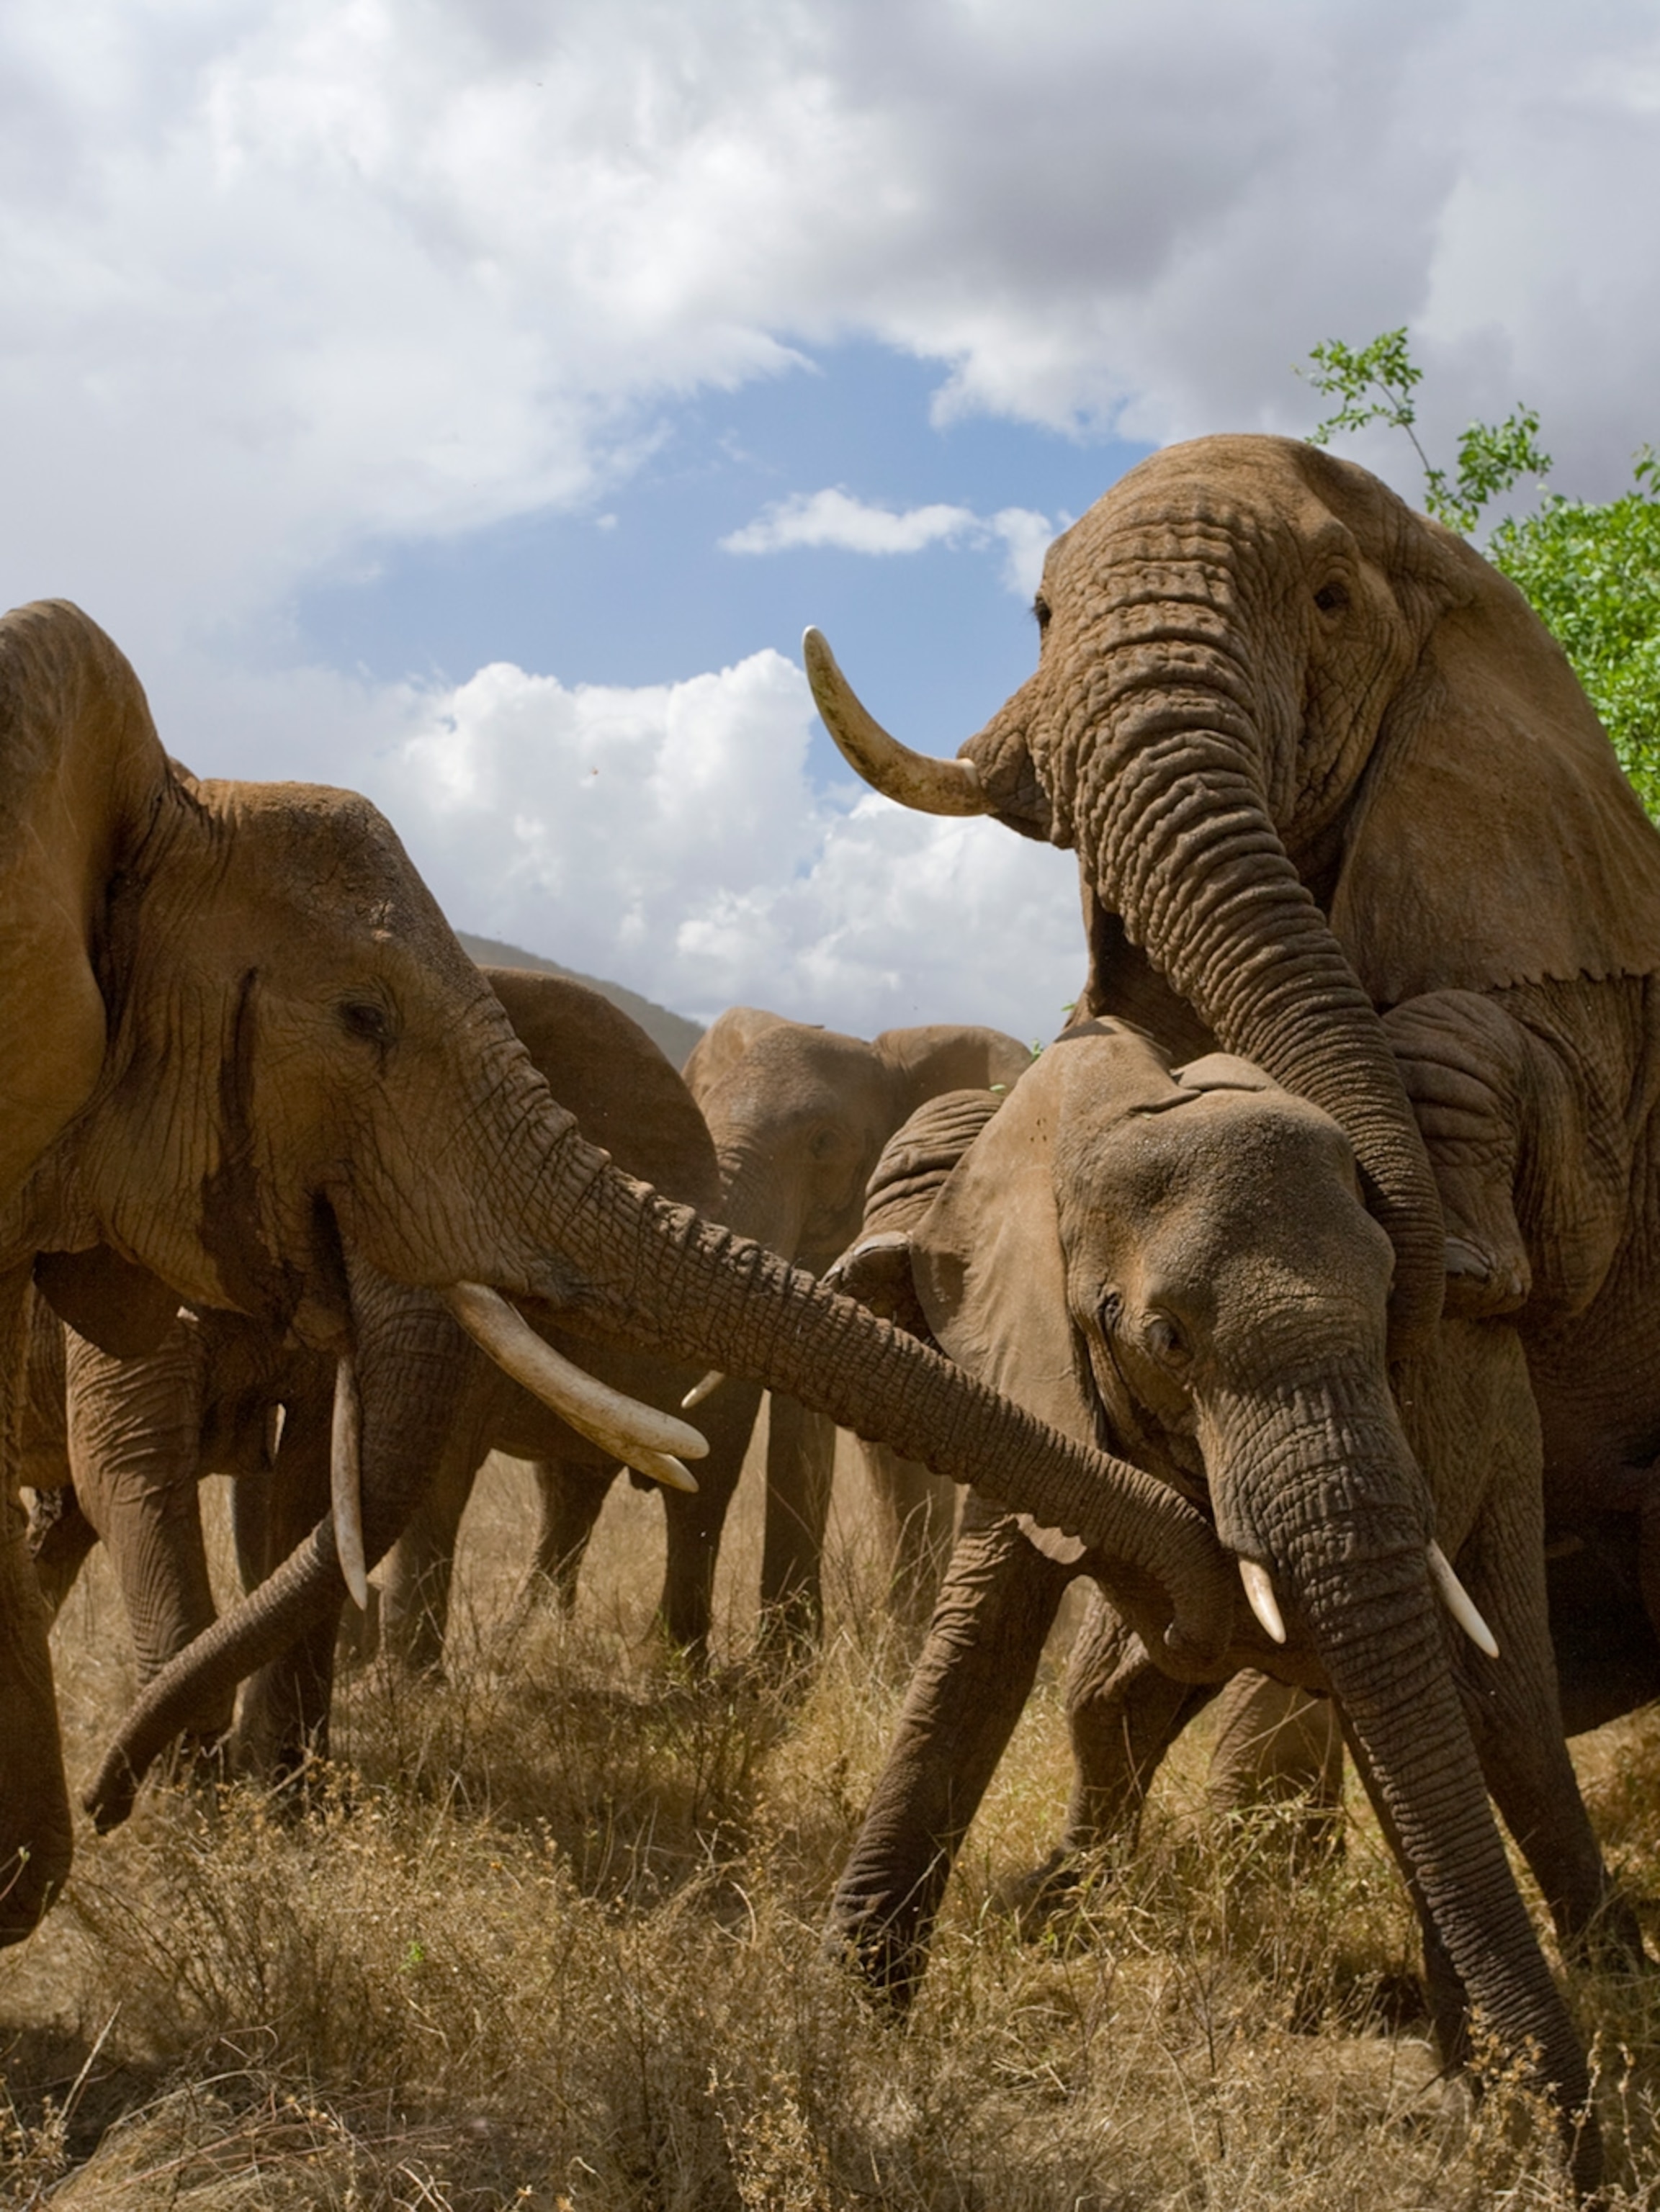 Do male elephants mate with many females?